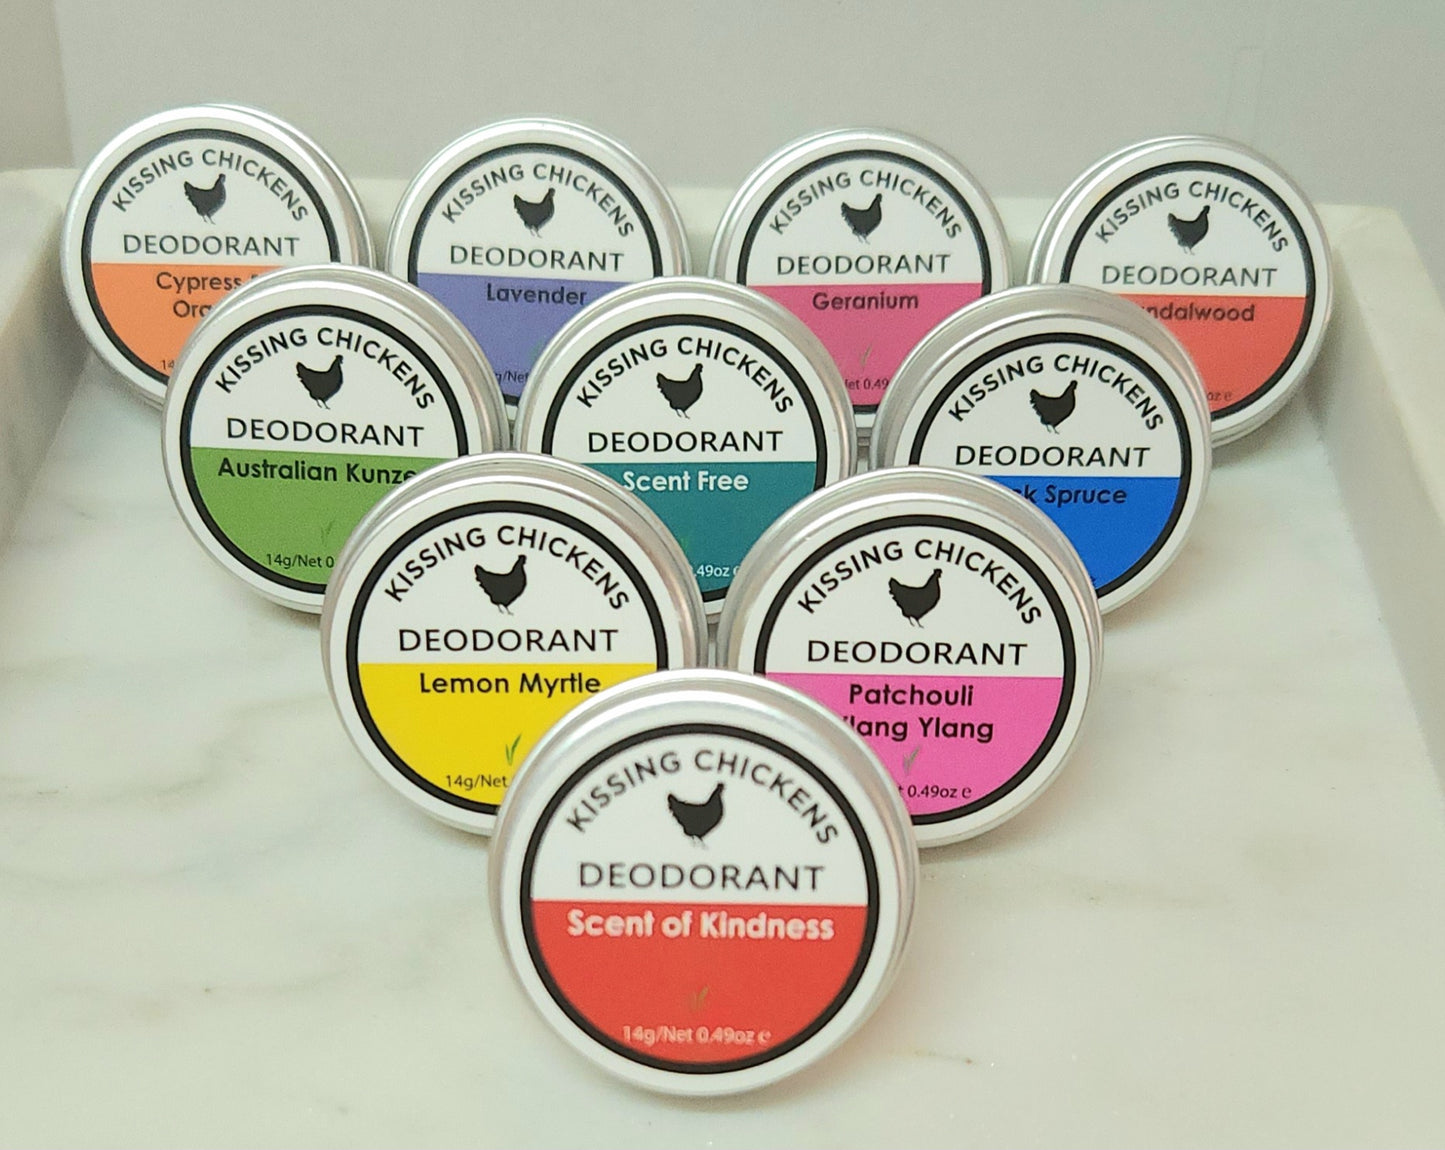 NEW PRODUCT! 14g Mini Tin Natural Deodorant Paste - Scent Free